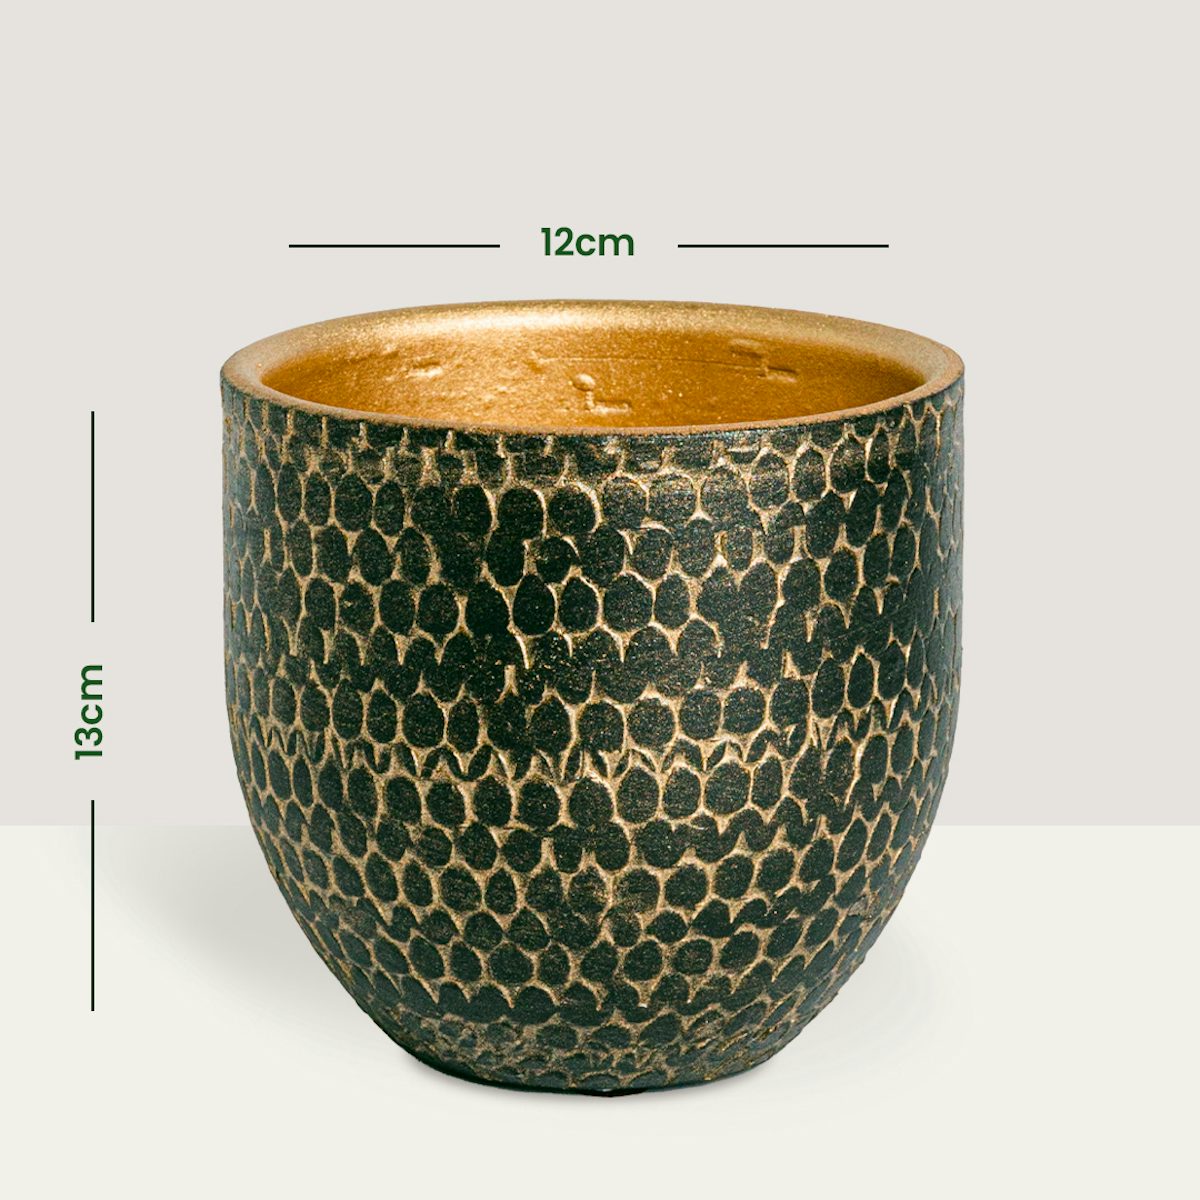 Morocco Flowerpot - S/12cm